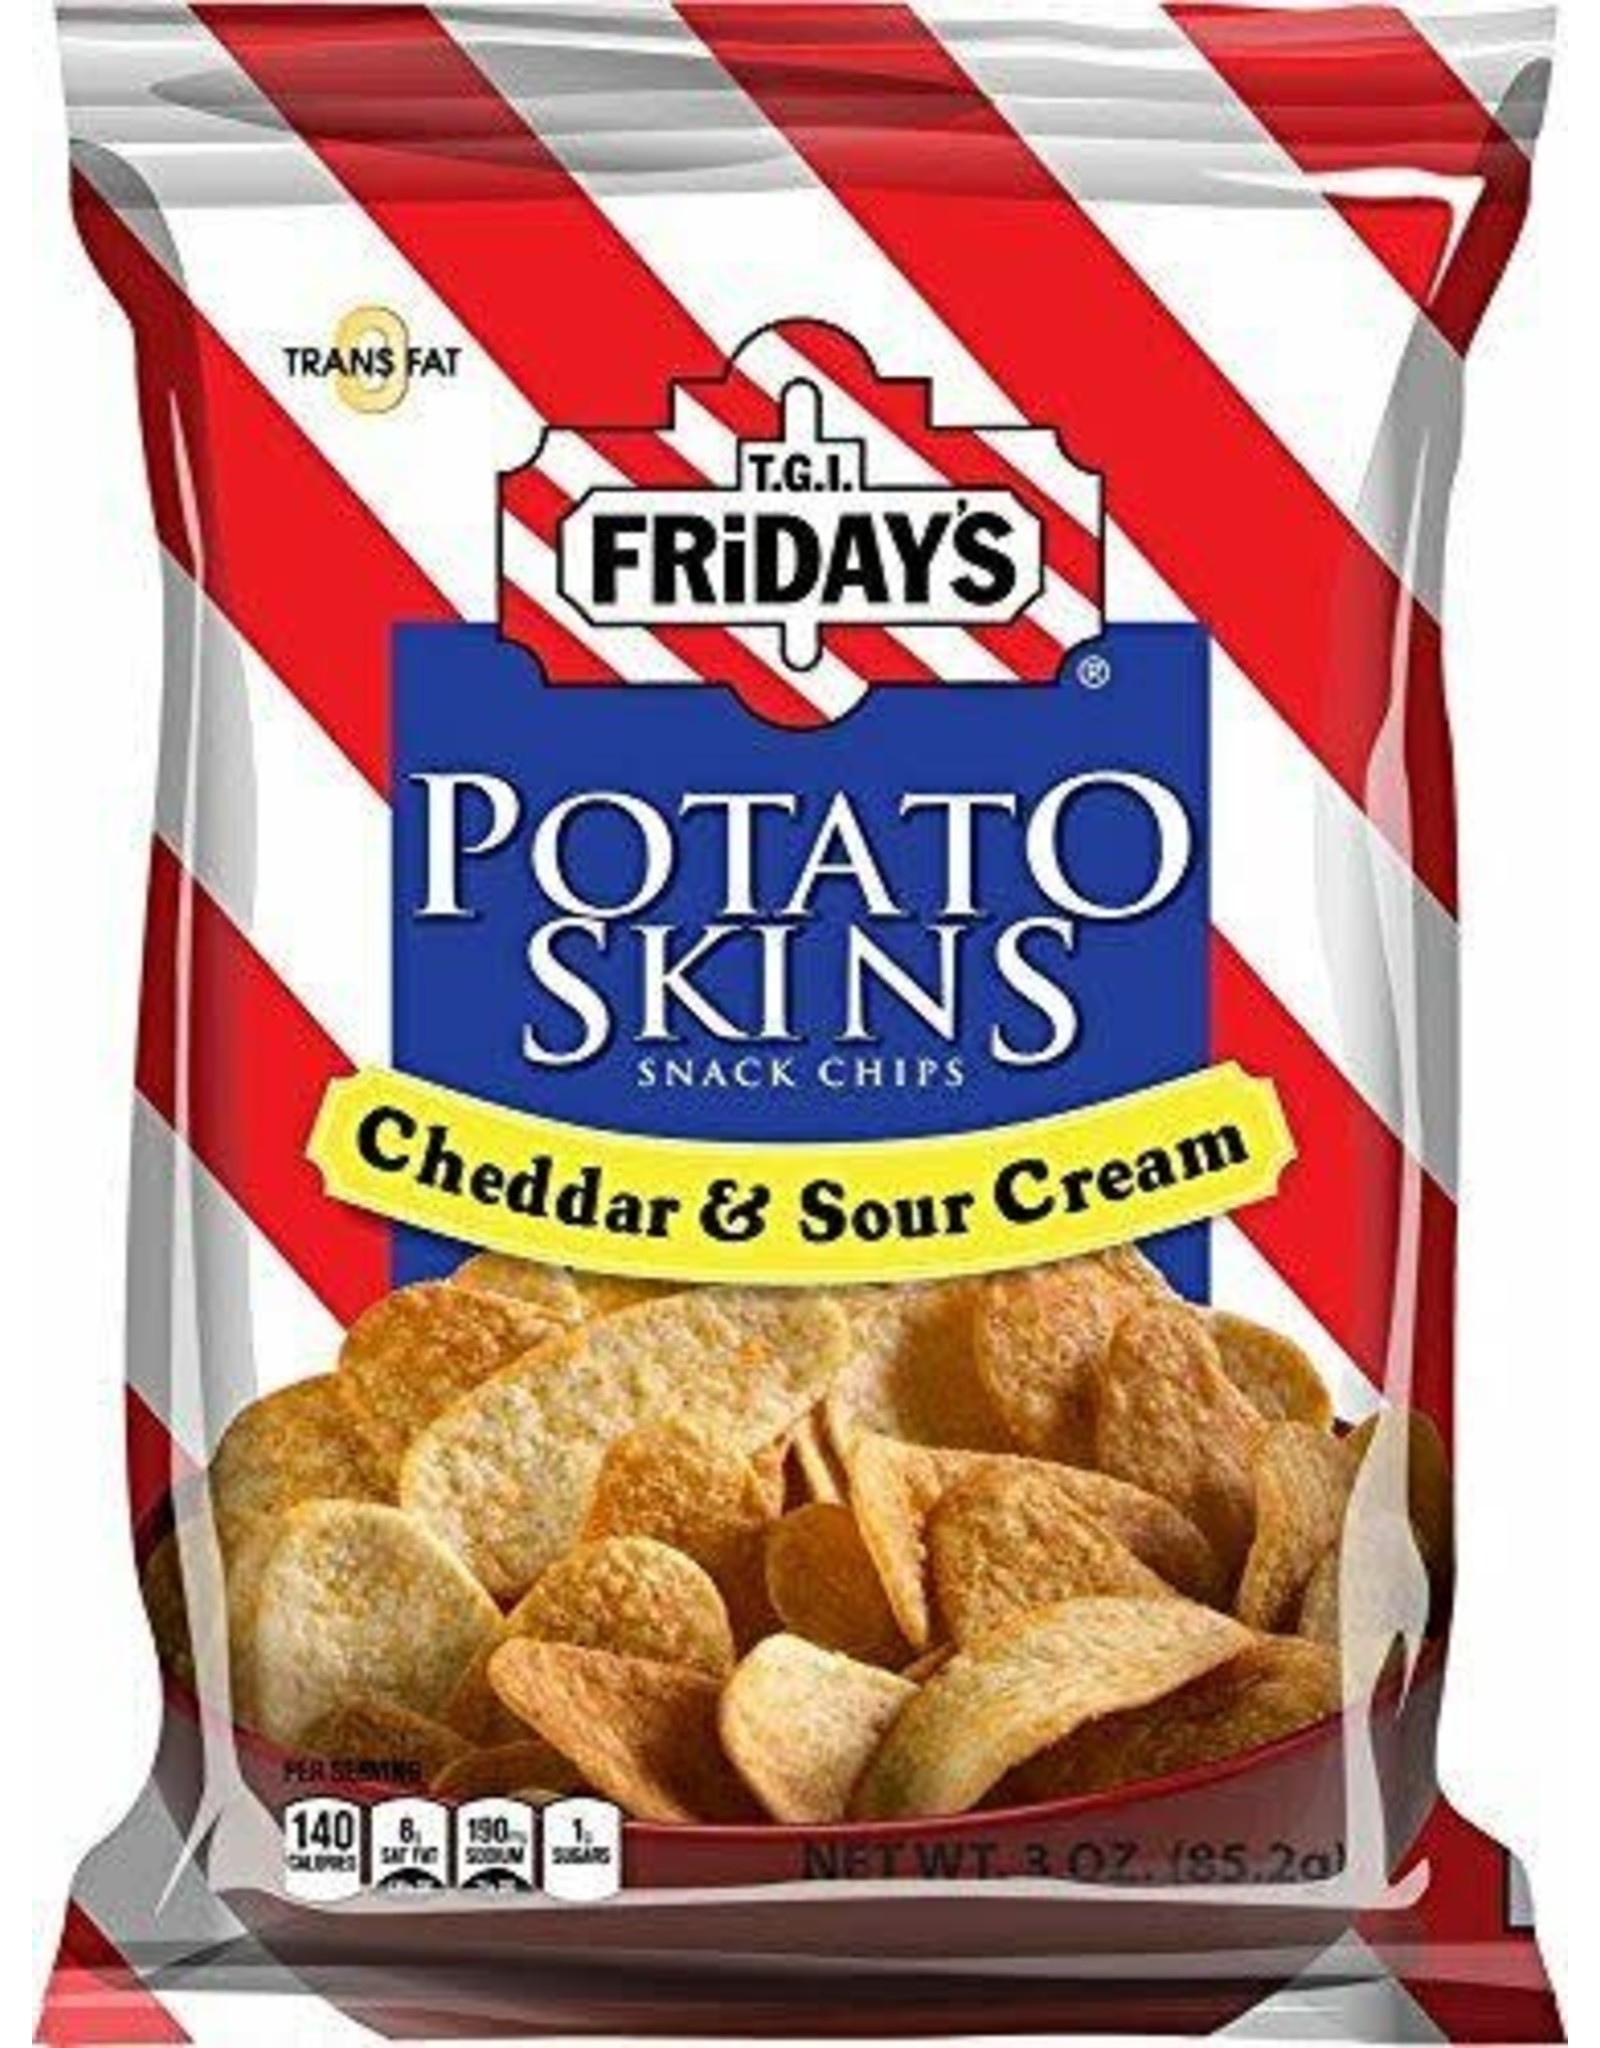 TGI Friday's Potato Skins - Cheddar Sour Cream Chips 3oz